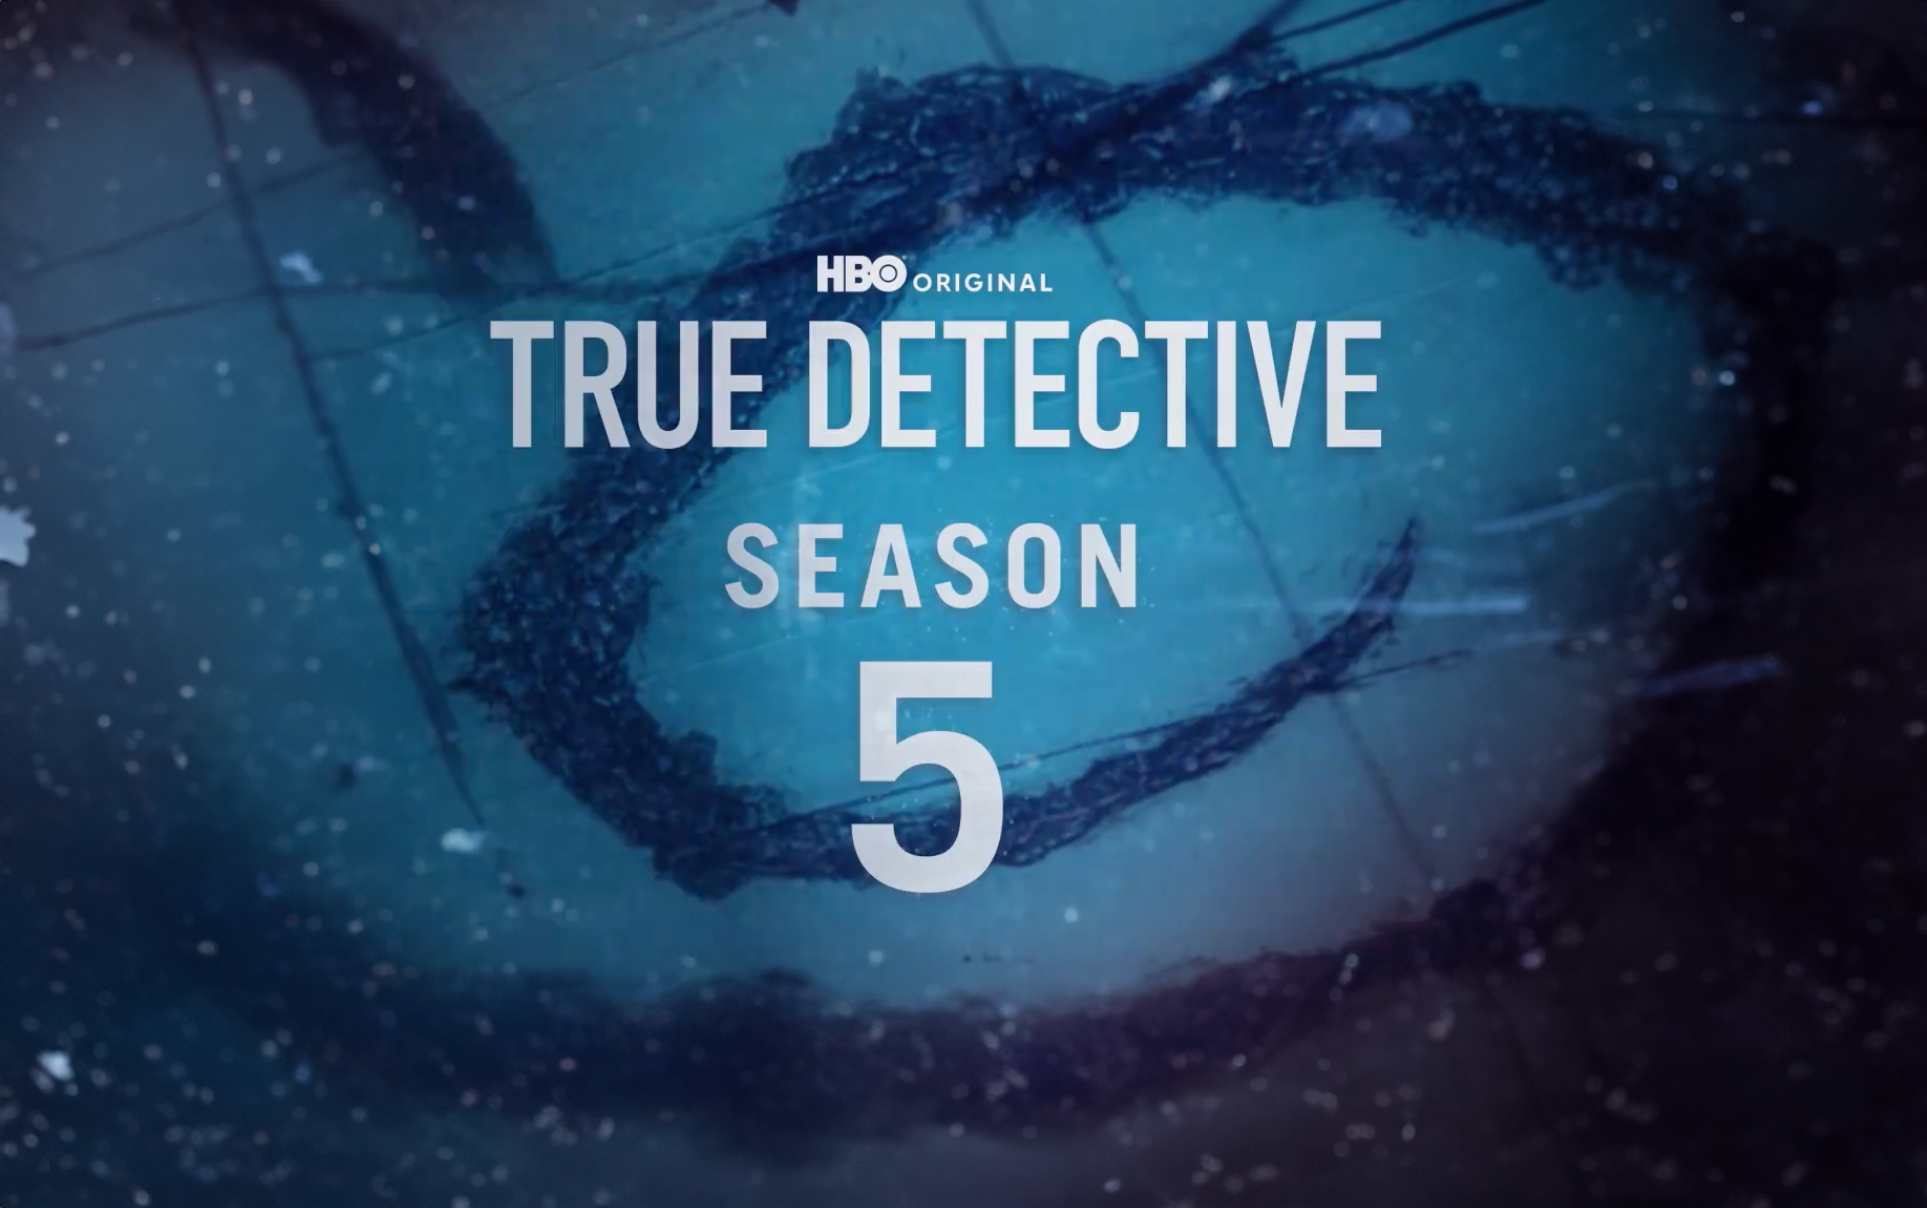 Pravi detektiv 5. sezona